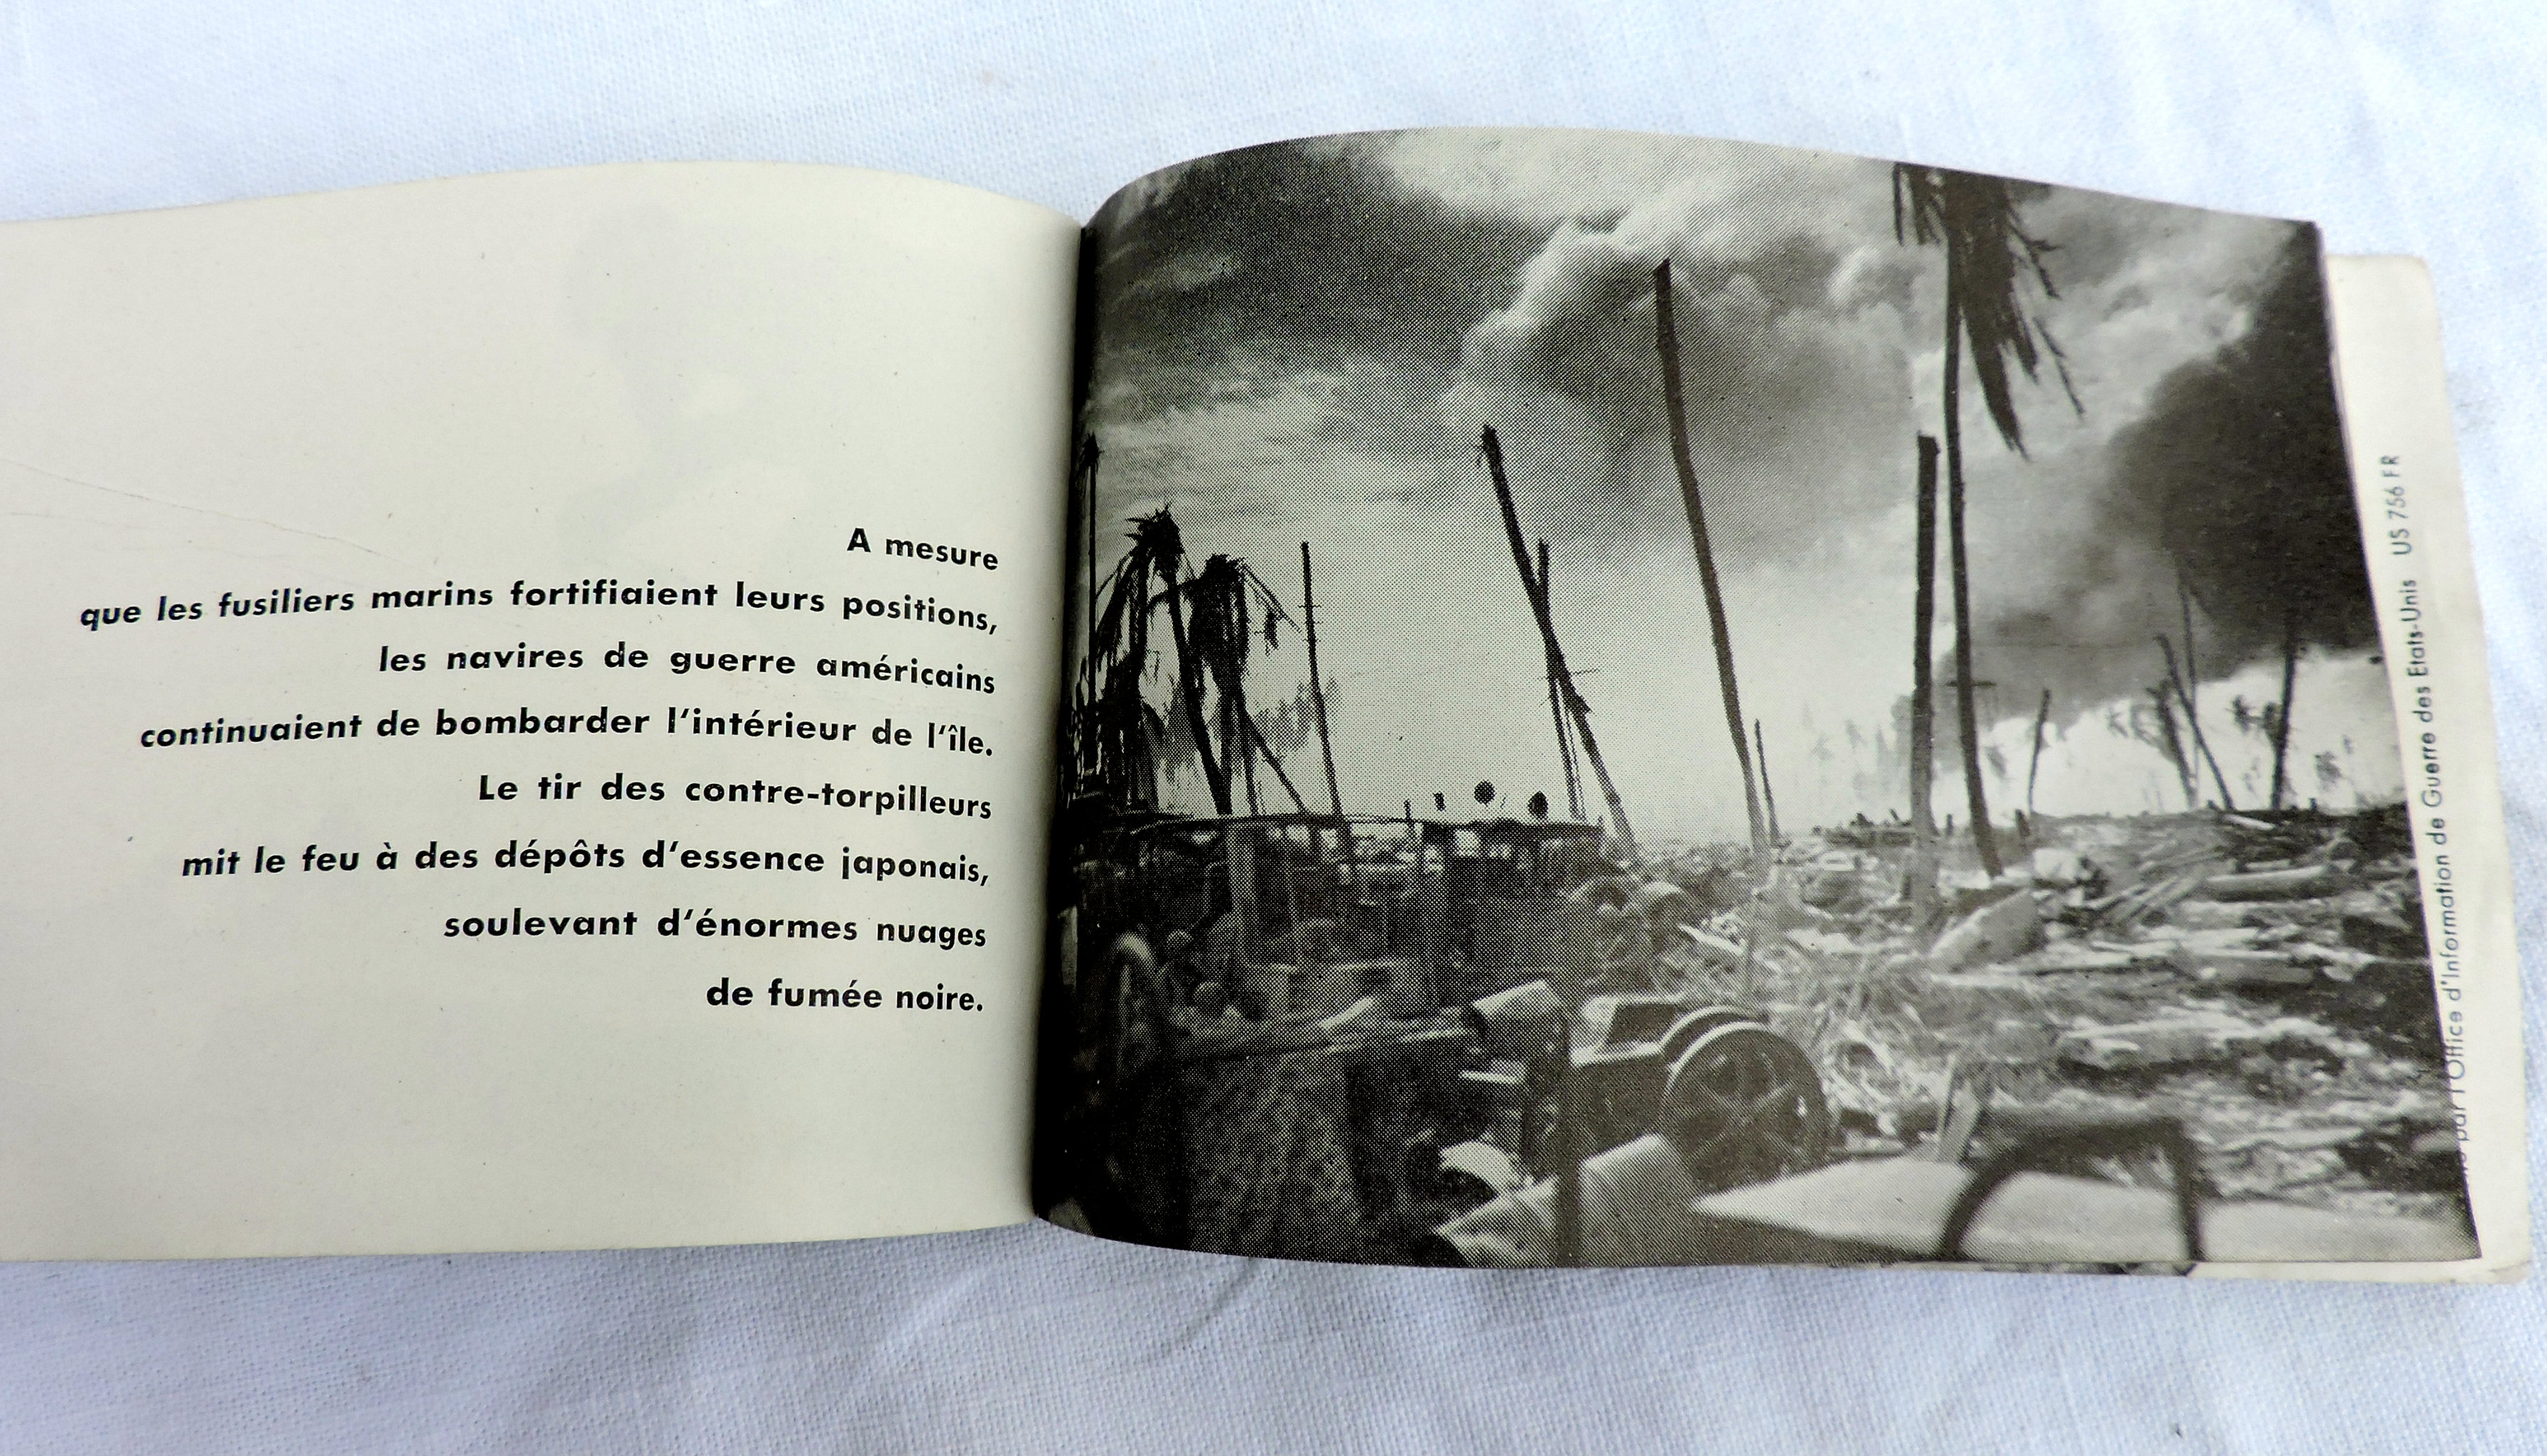 Brochure Tarawa   Office d&#039;information de guerre des Etats-Unis